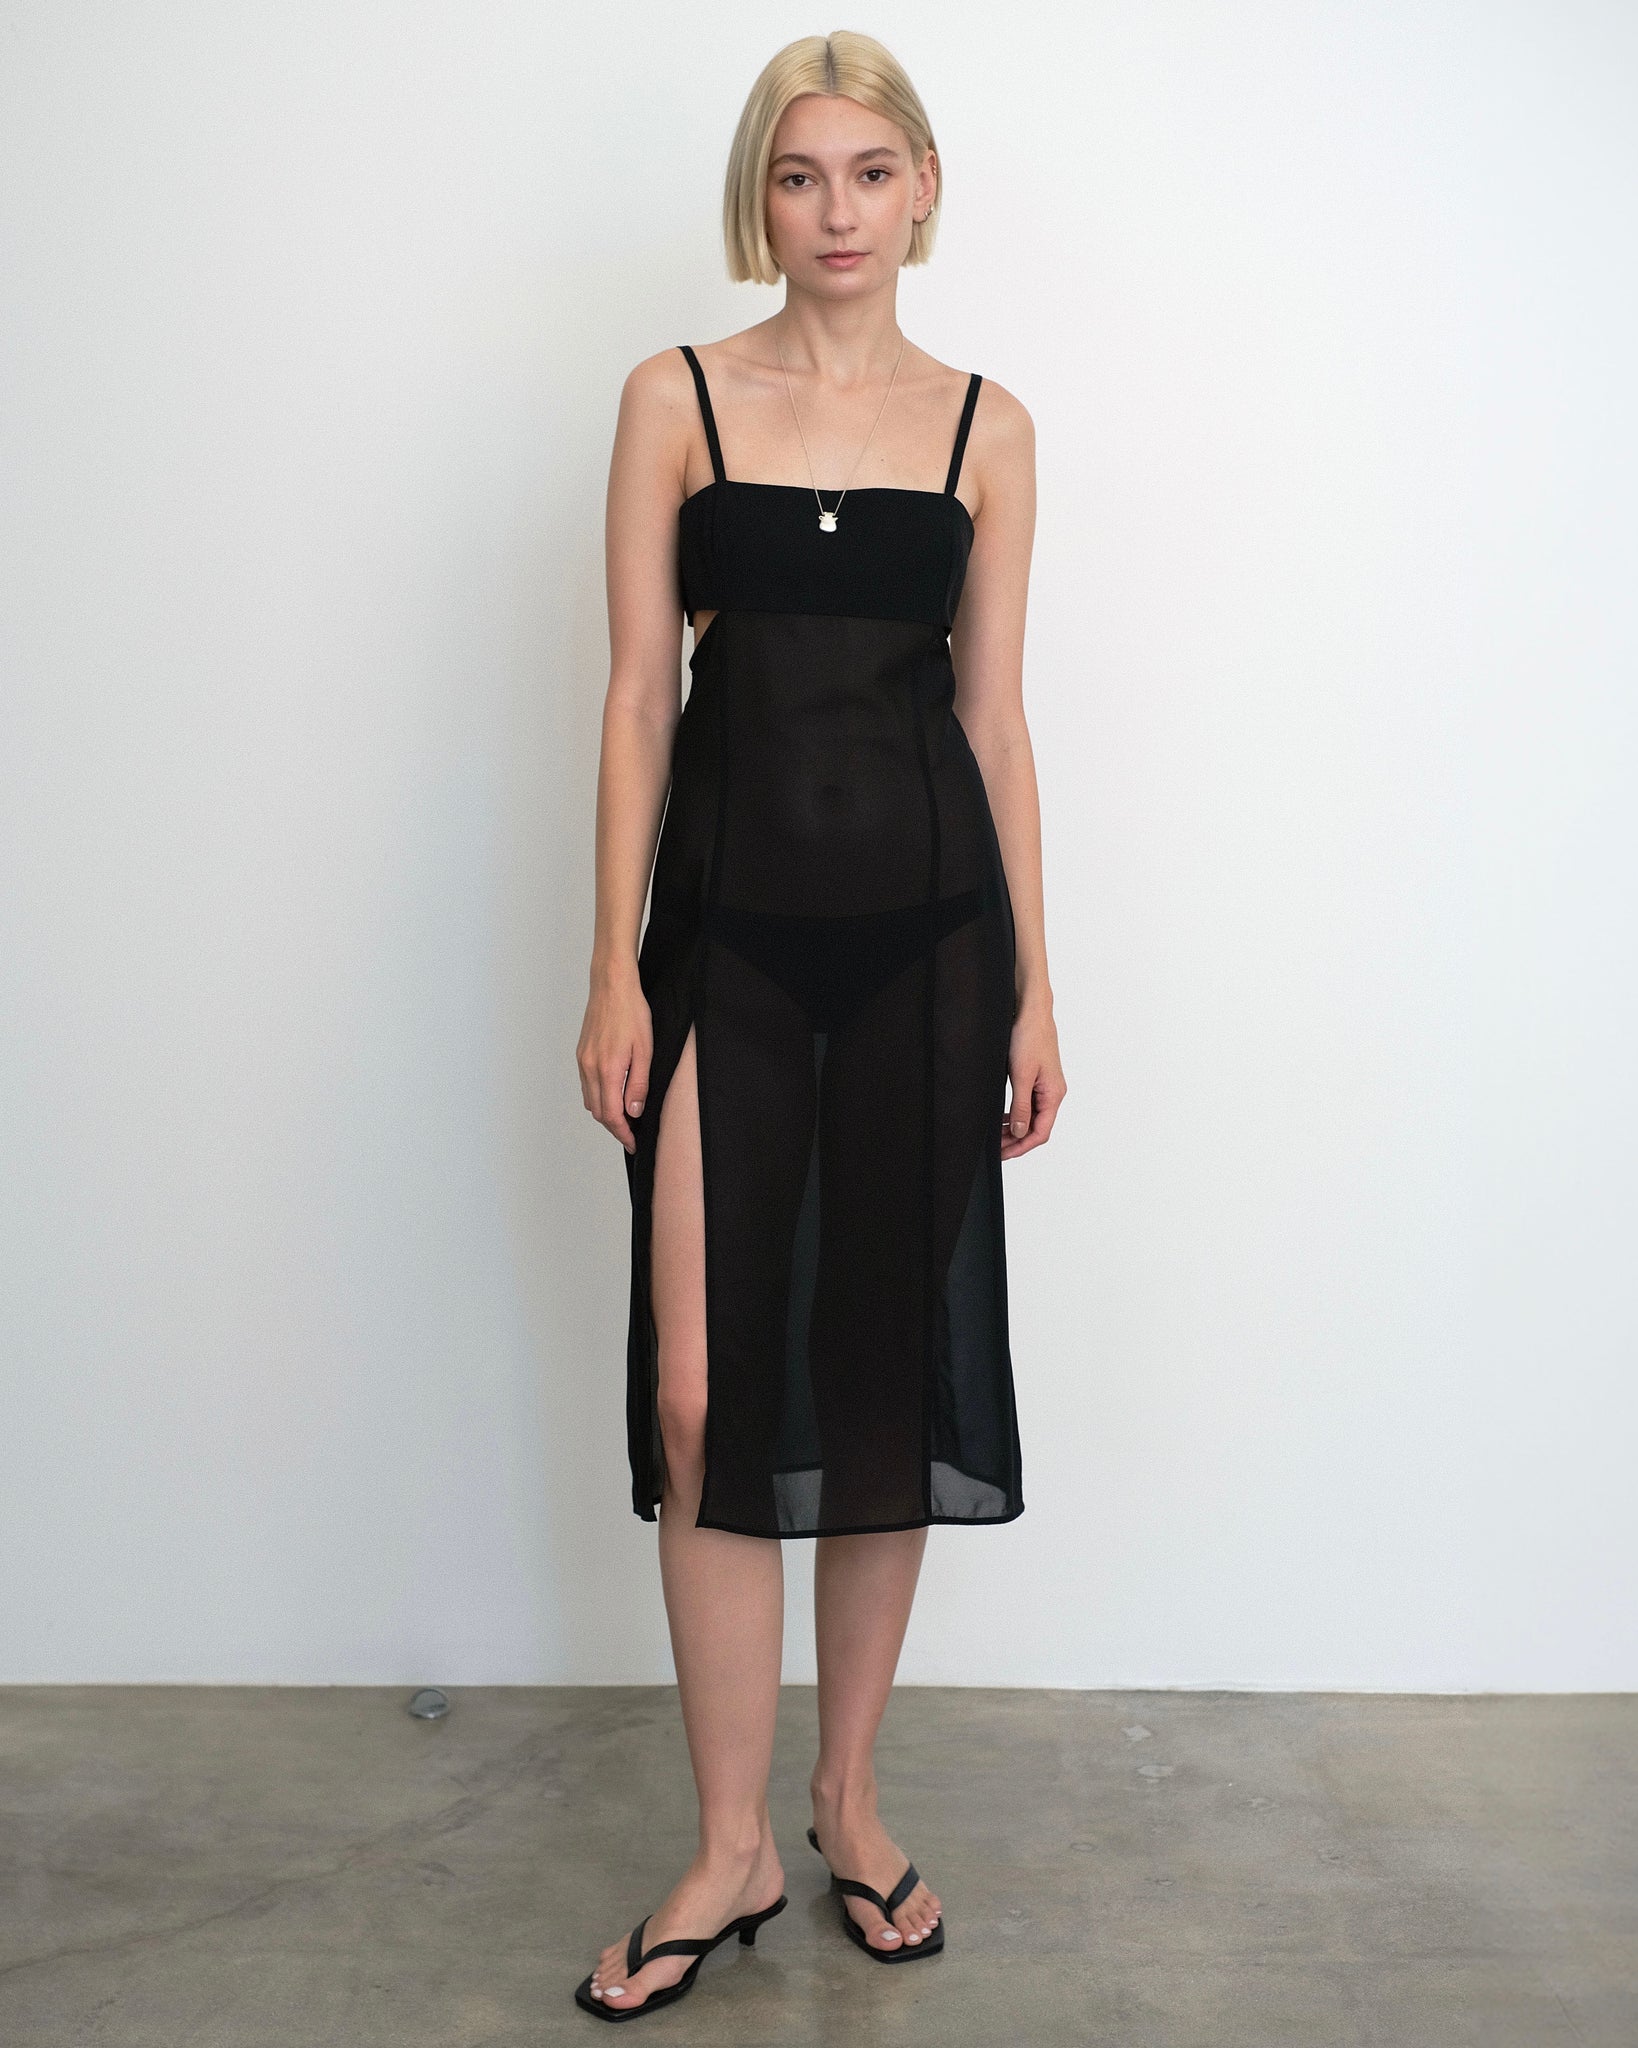 Model wearing a sheer, black midi dress with side slits from Una Hayde